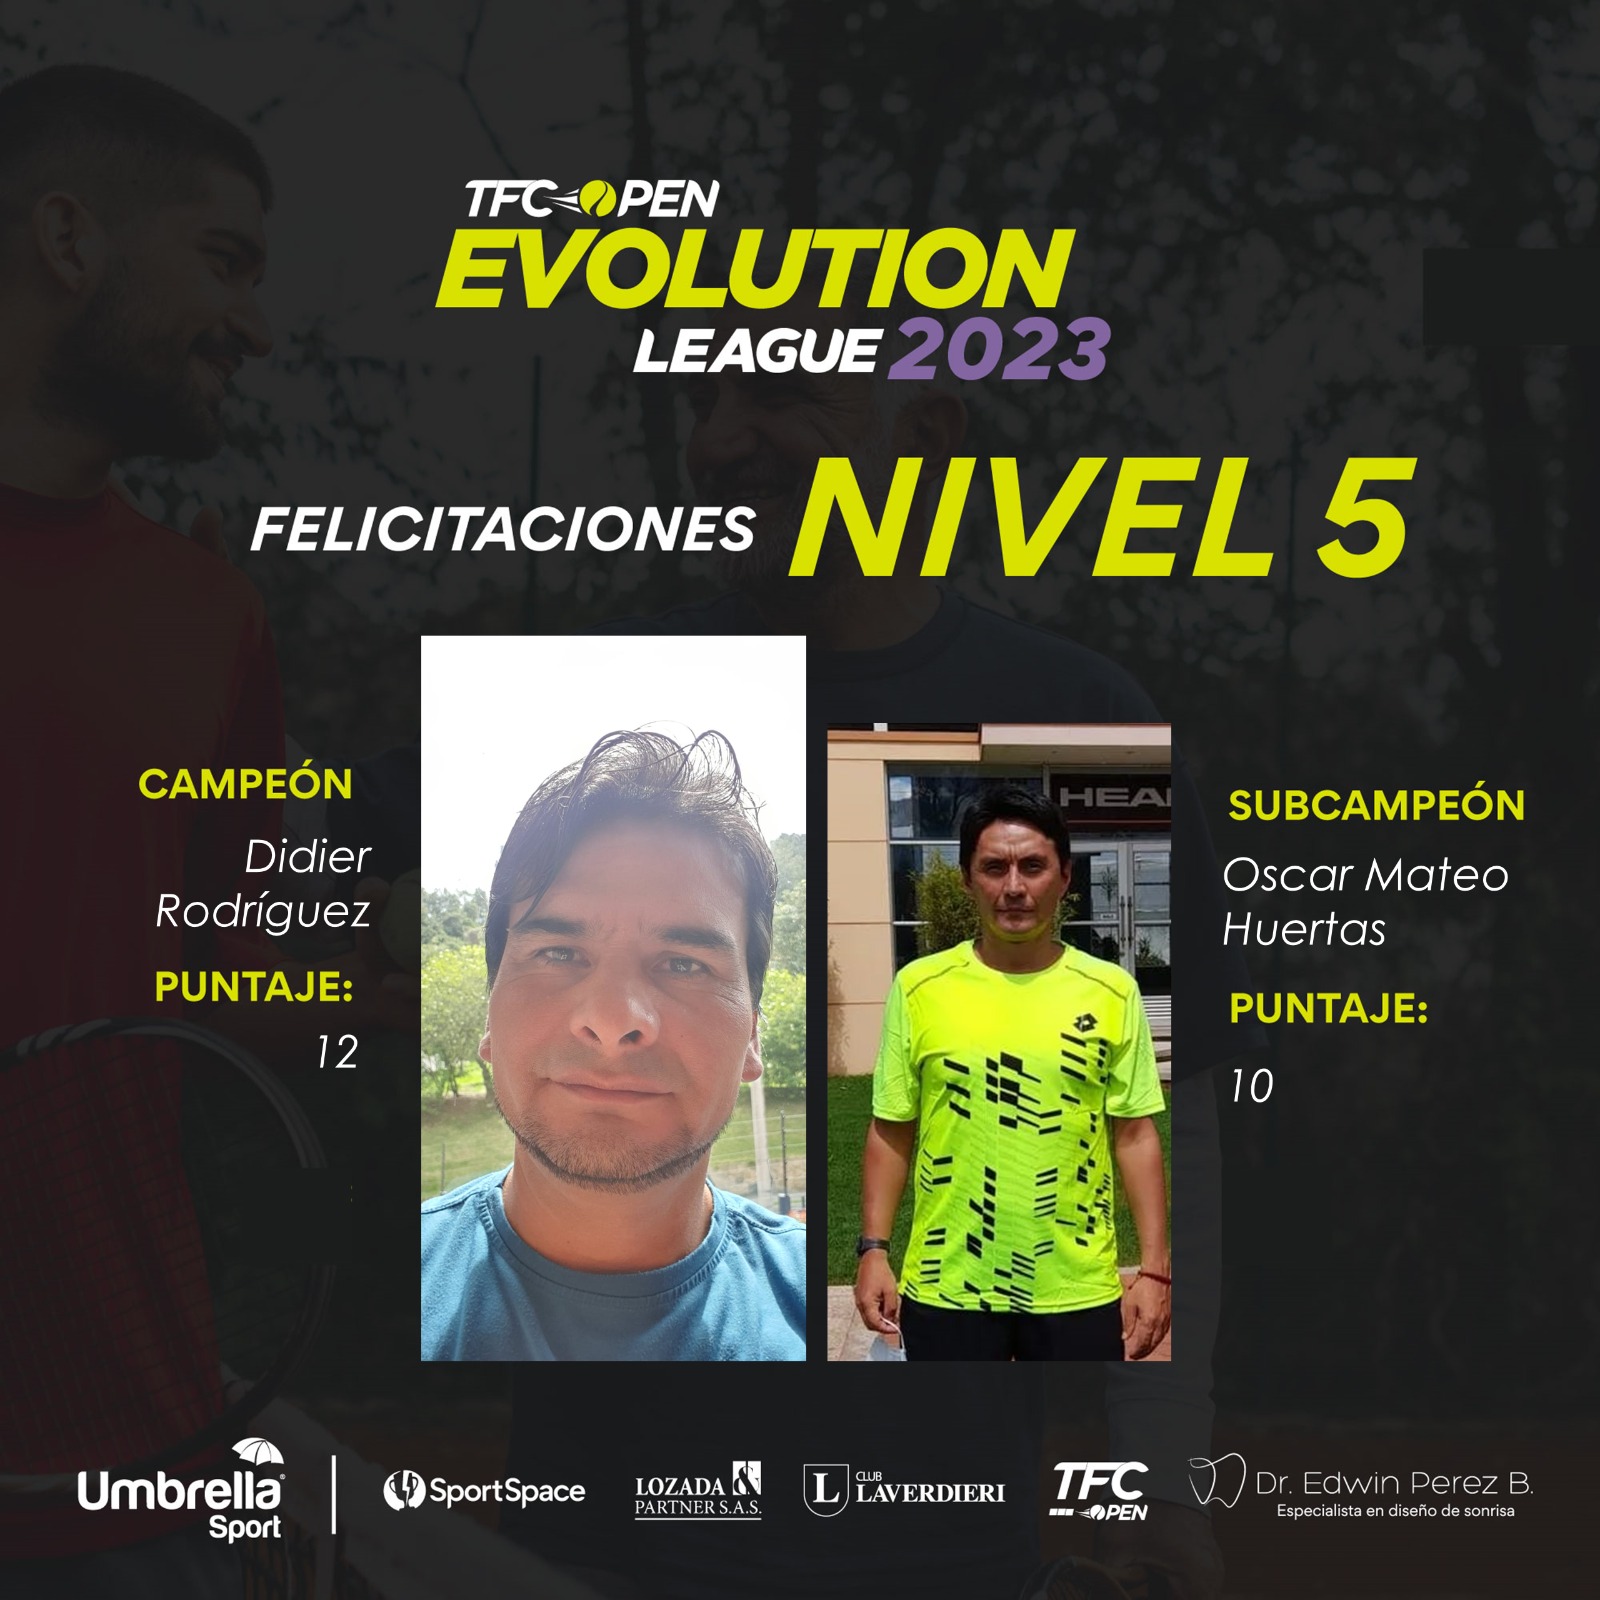 evolution-11-08 at 08.02.21 (1)